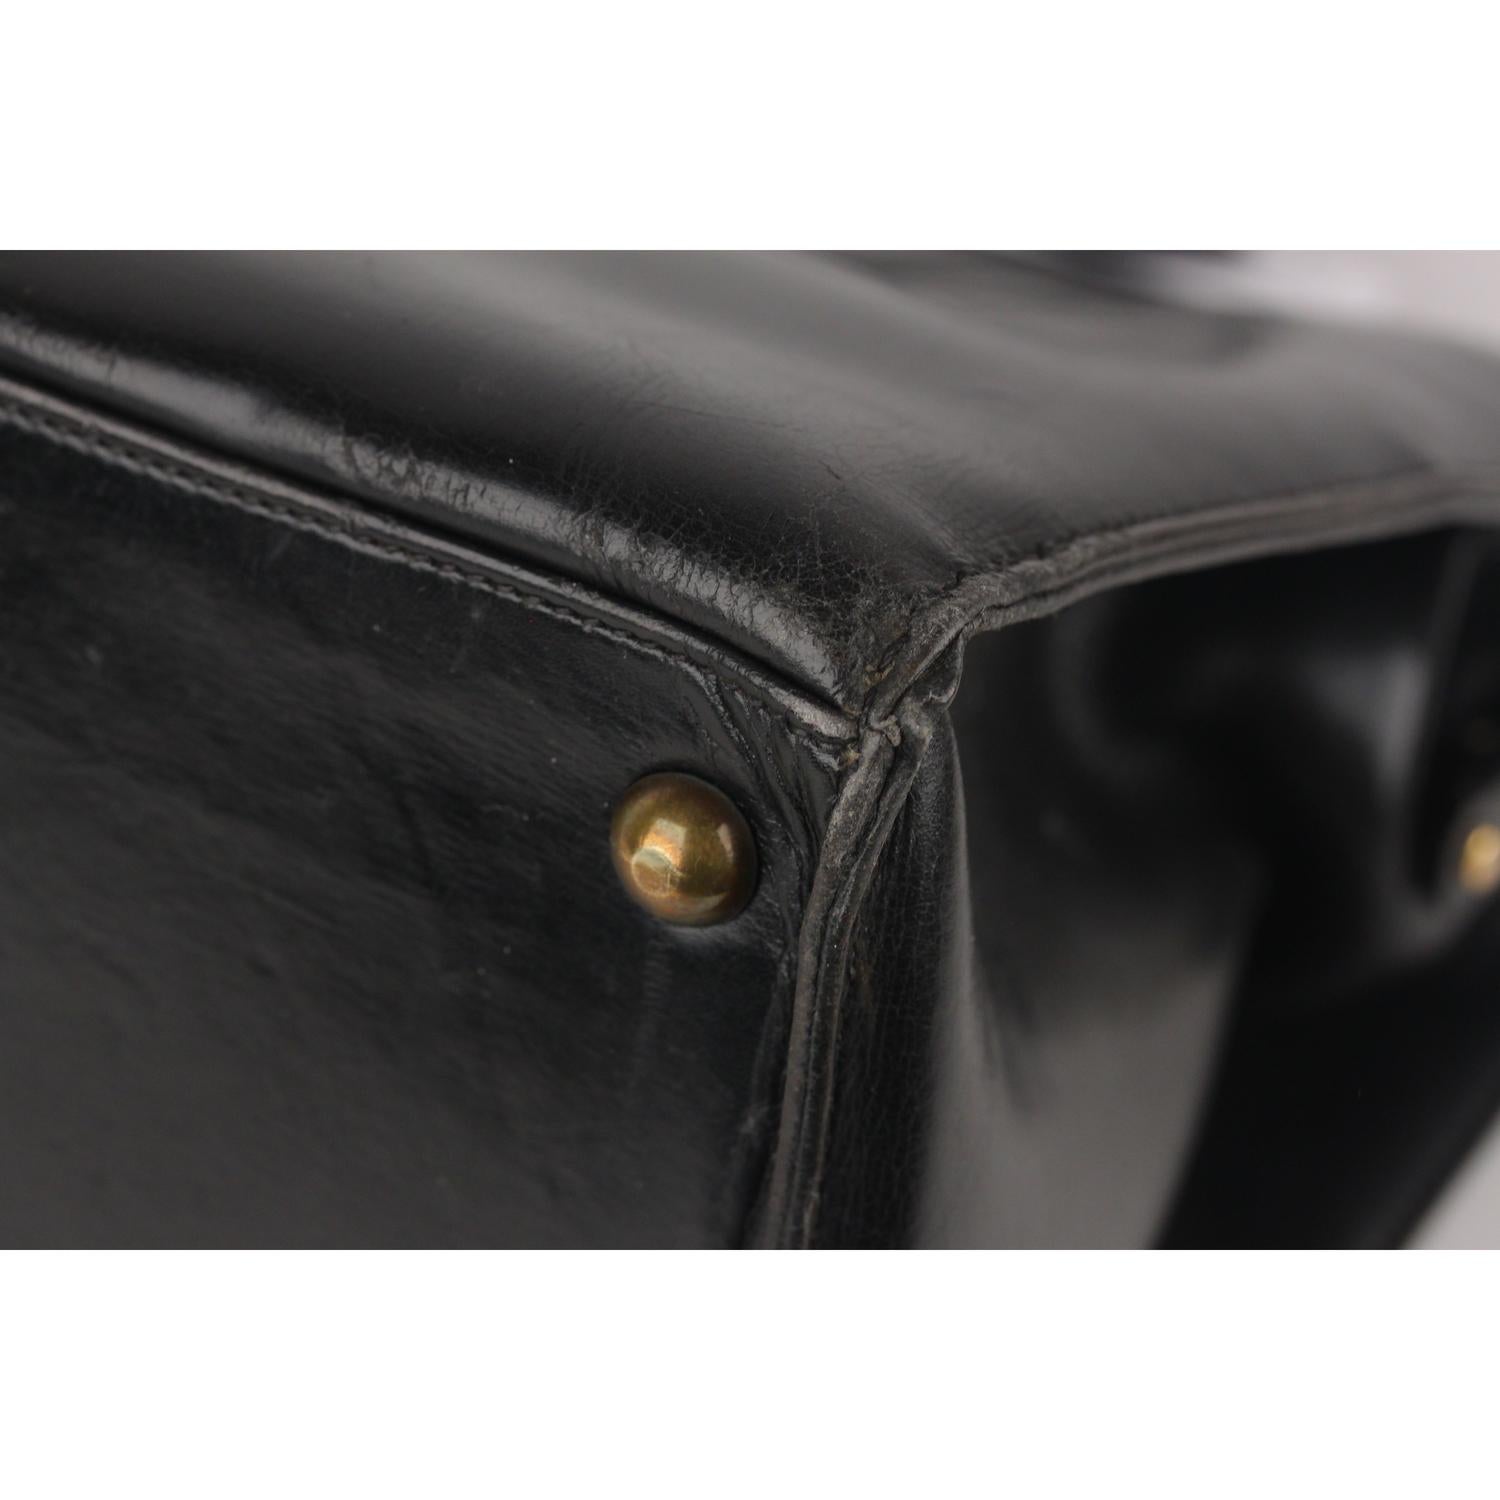 Hermes Vintage Rare Black Leather Sac 404 Top Handle Bag 2